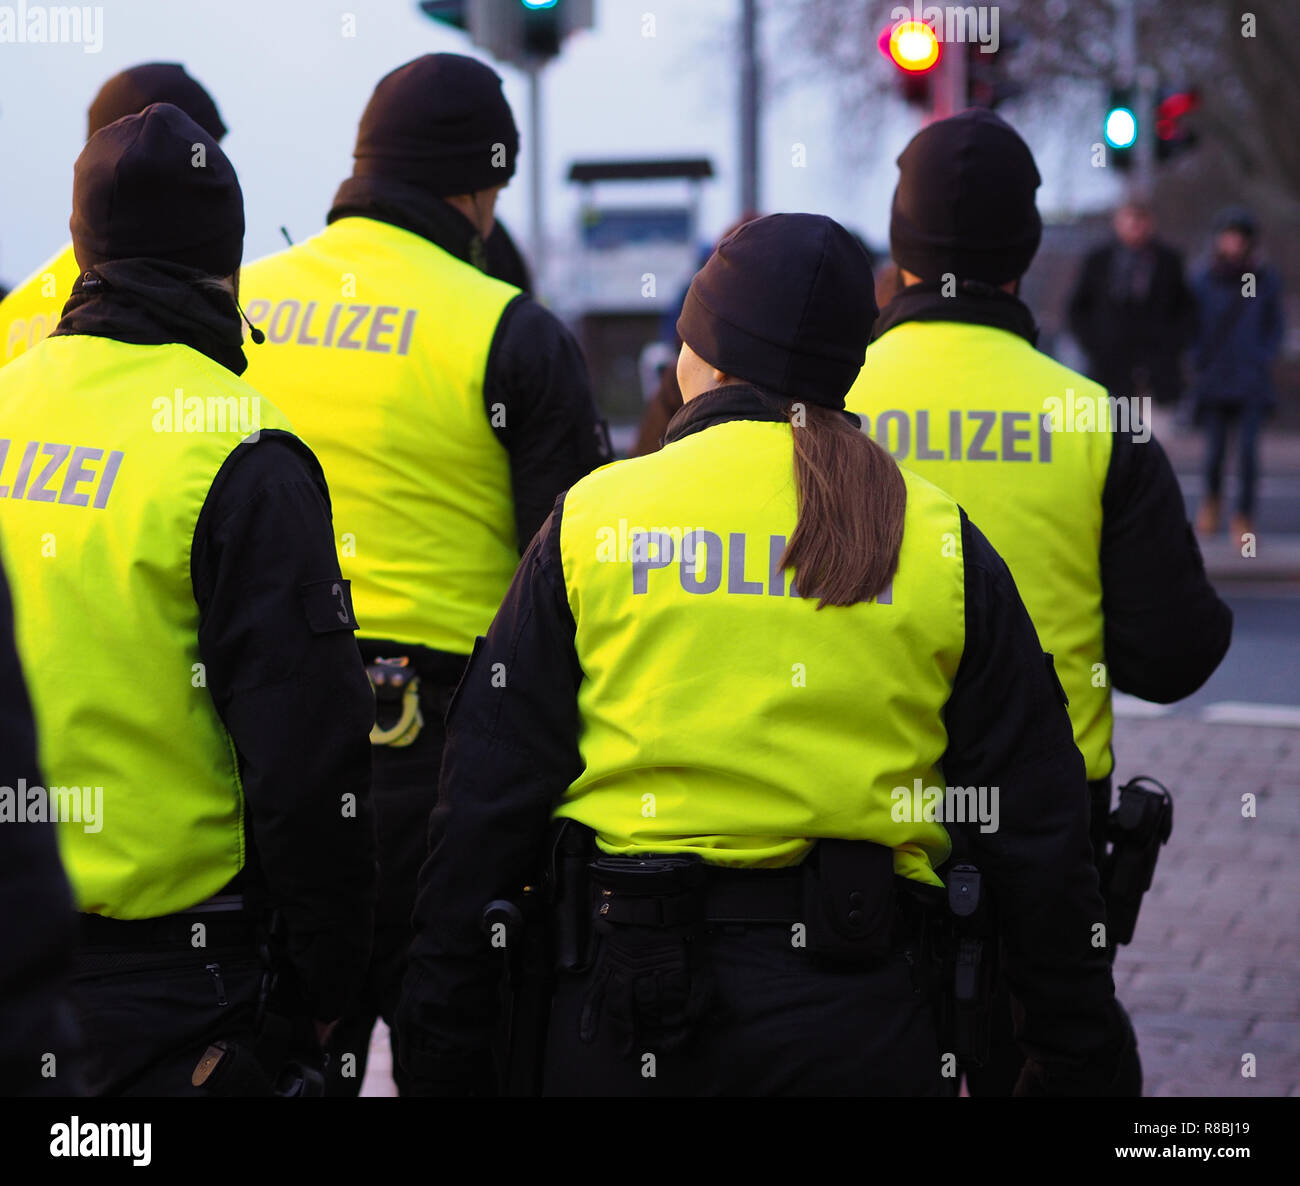 Bremen, Germany - Group of police officers in black uniforms and hi-viz vests patrolling the christmas market Stock Photo